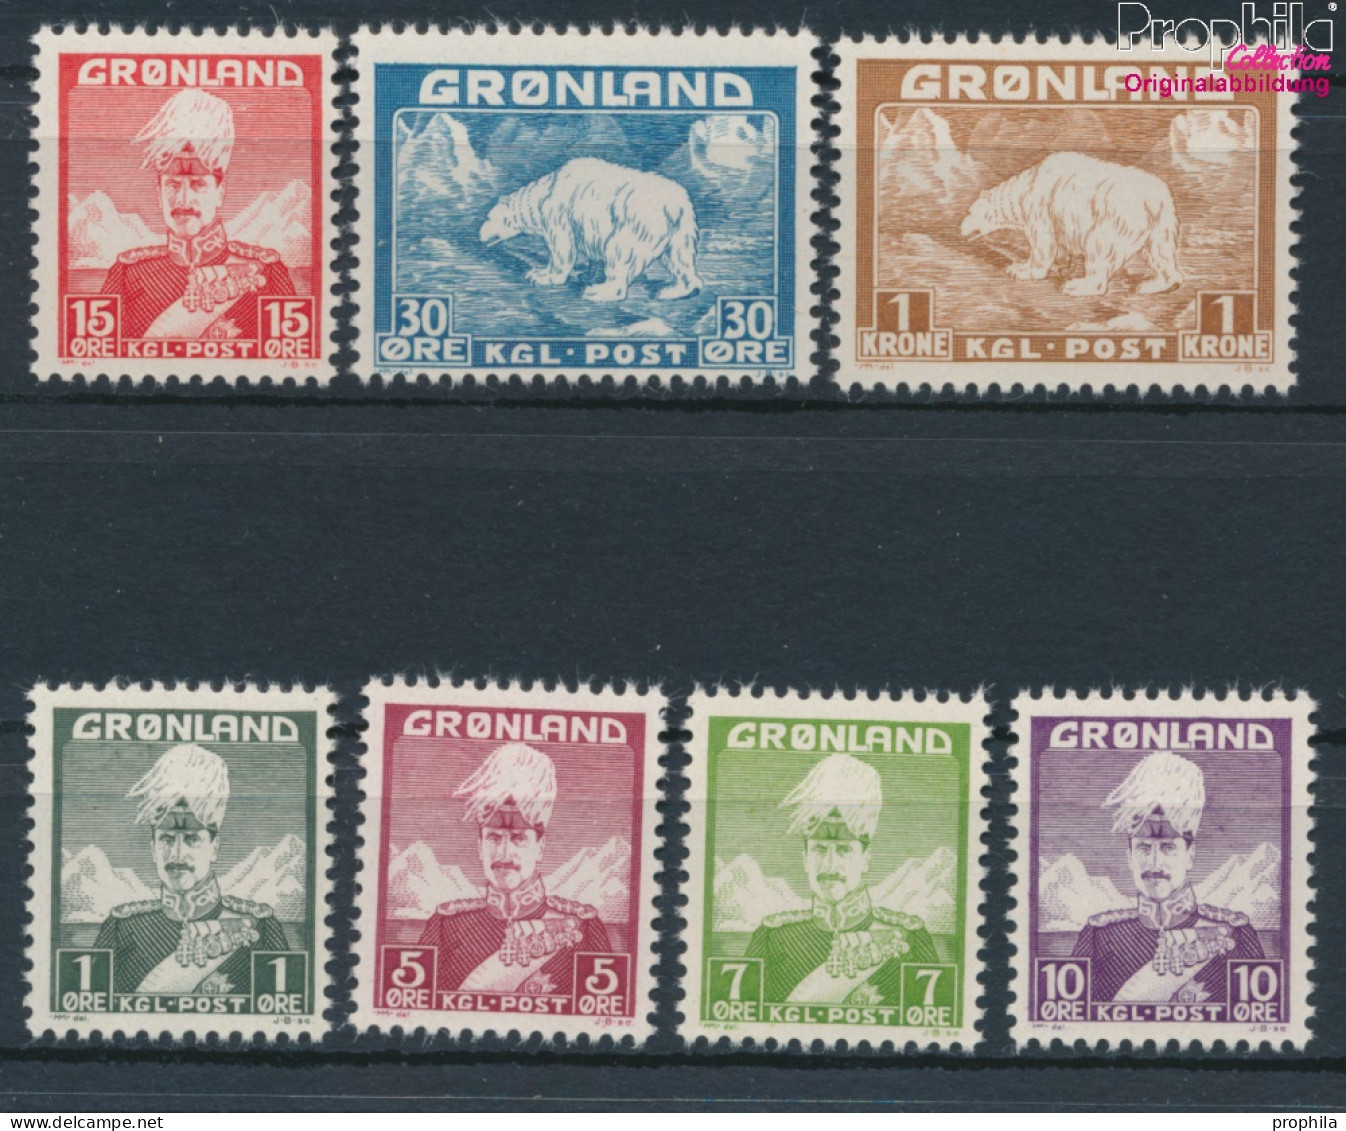 Dänemark - Grönland Postfrisch Christian X. 1938 König Christian X.  (10174221 - Oblitérés